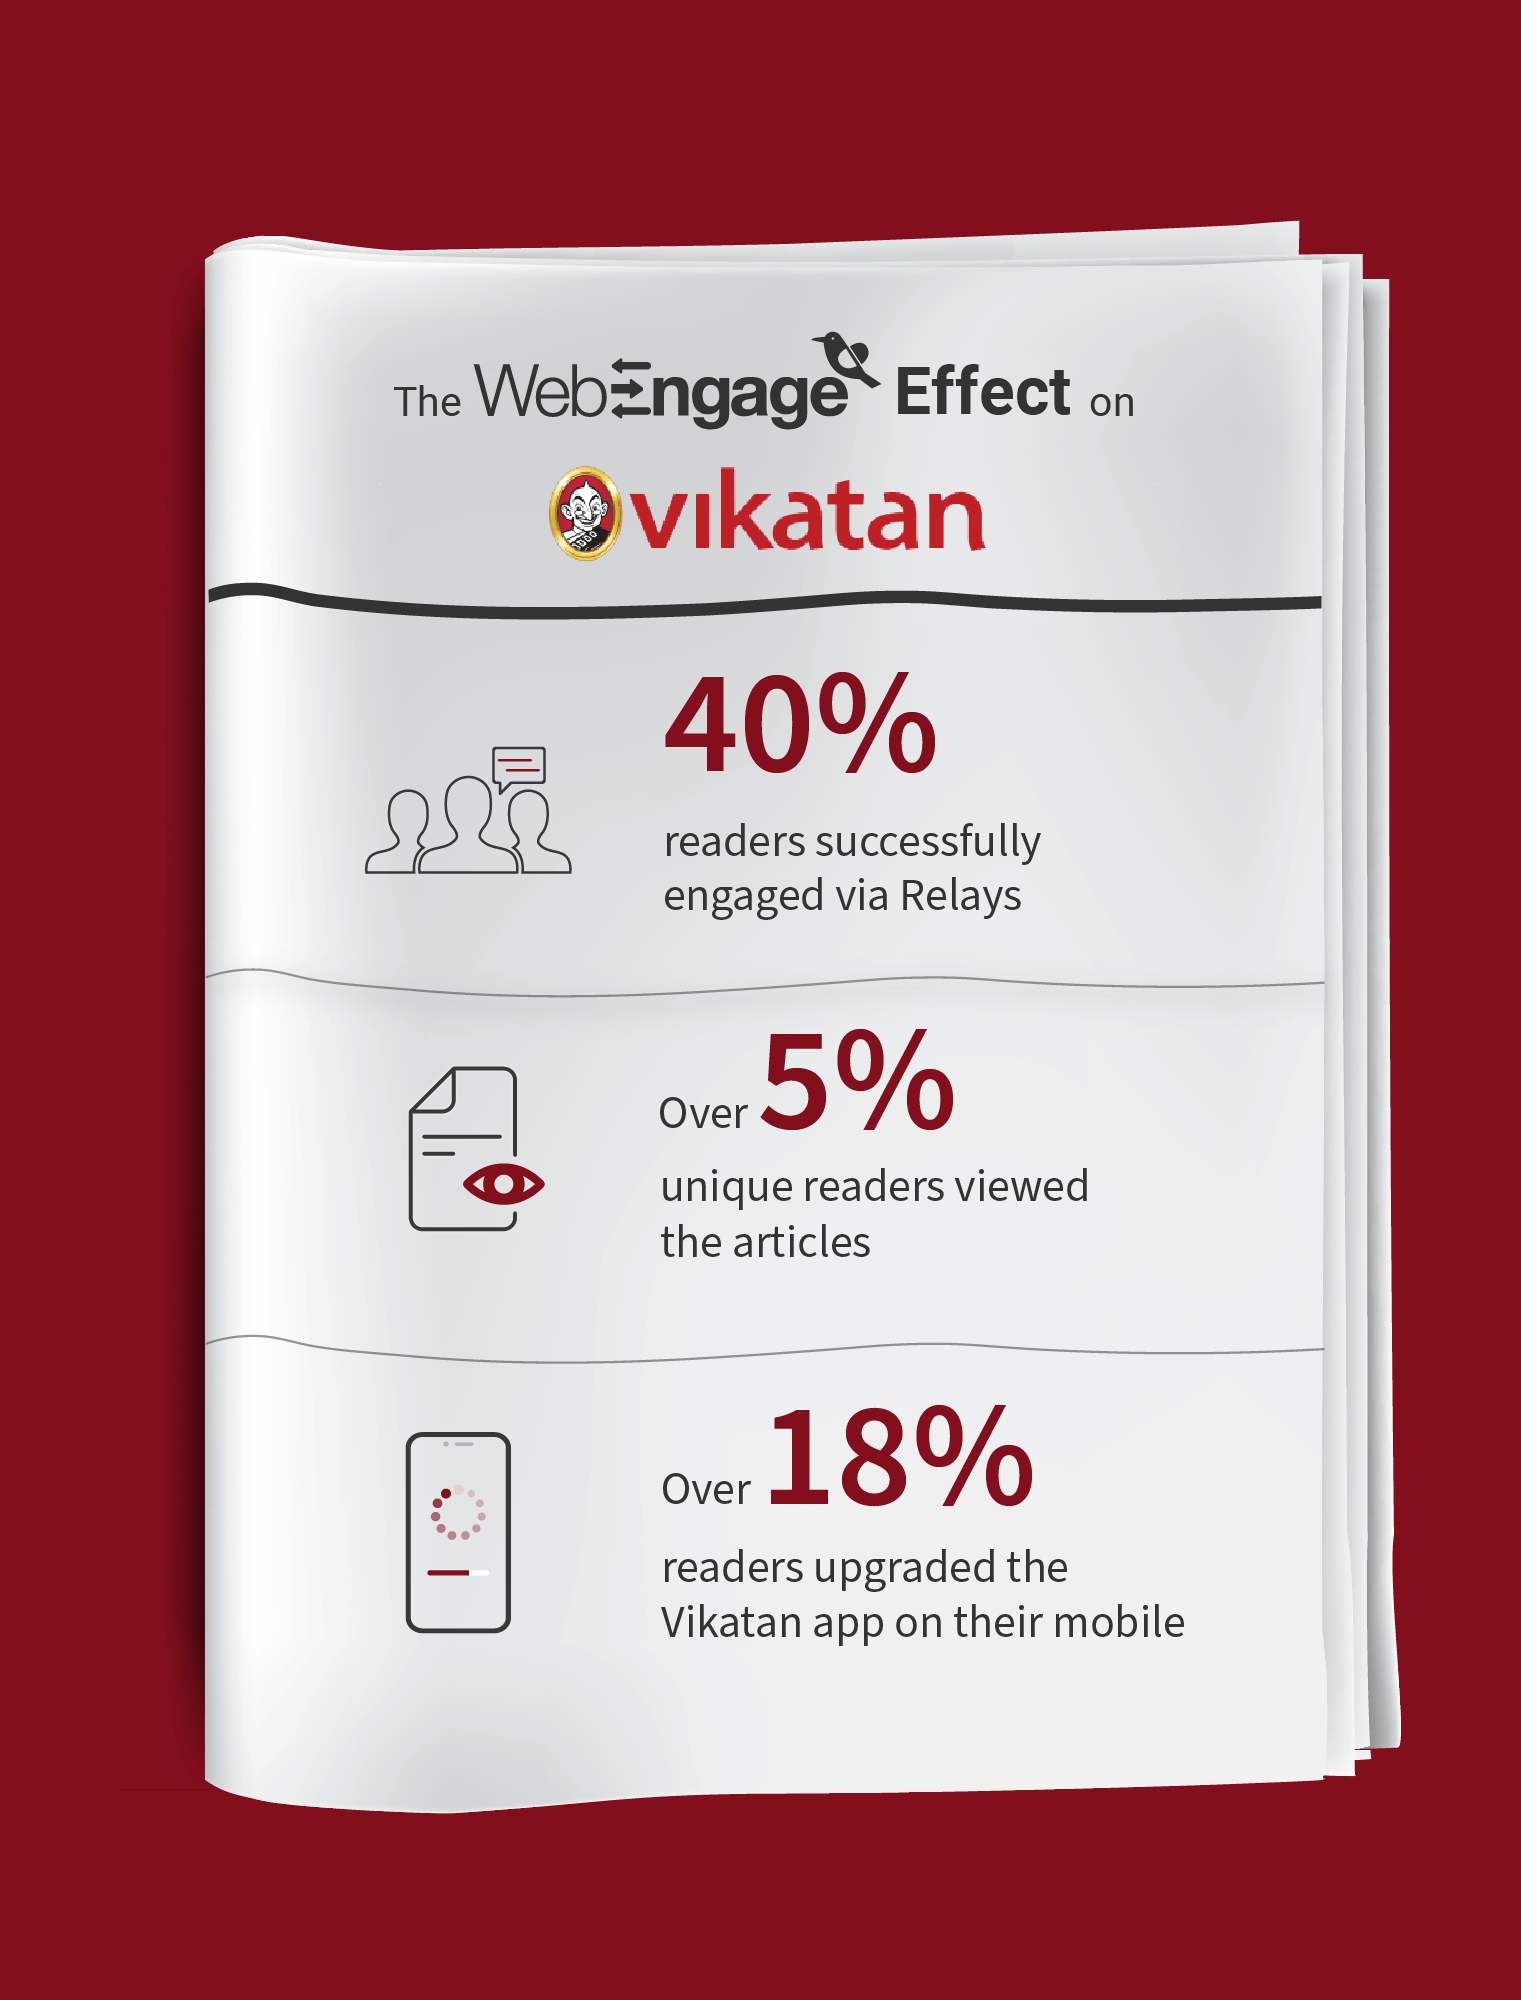 The WebEngage Effect on Vikatan